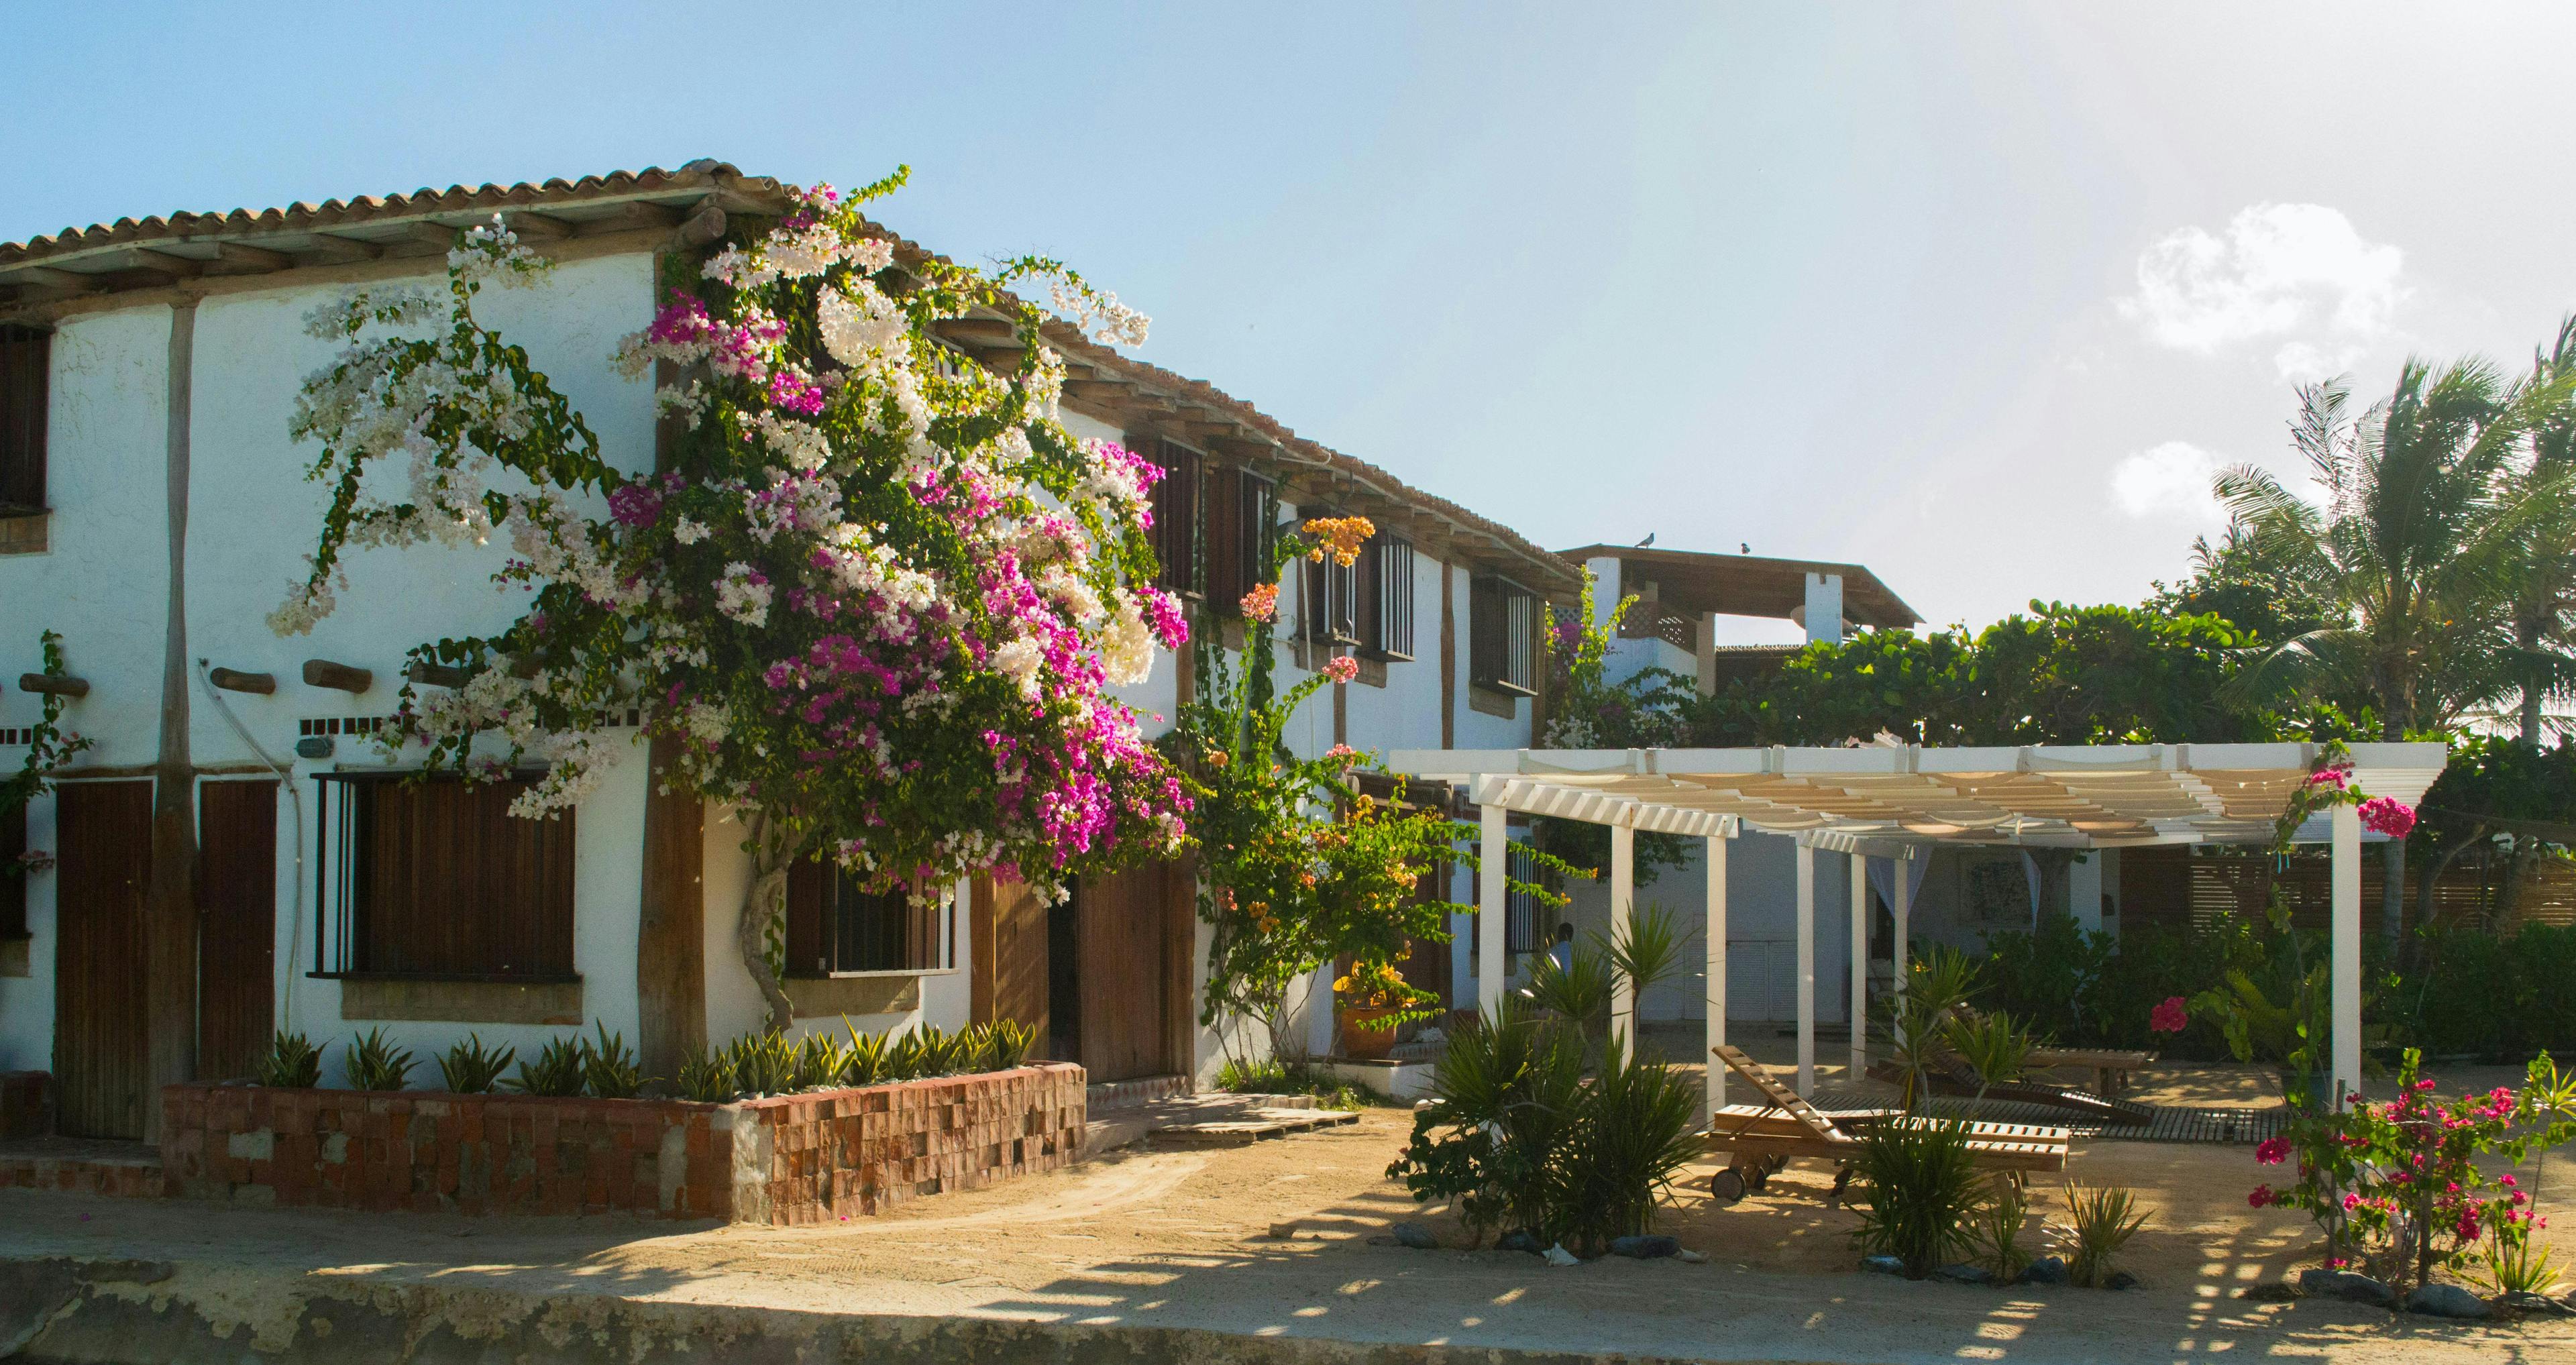 Jurupa Valley Short Term Rental Regulation: A Guide For Airbnb Hosts